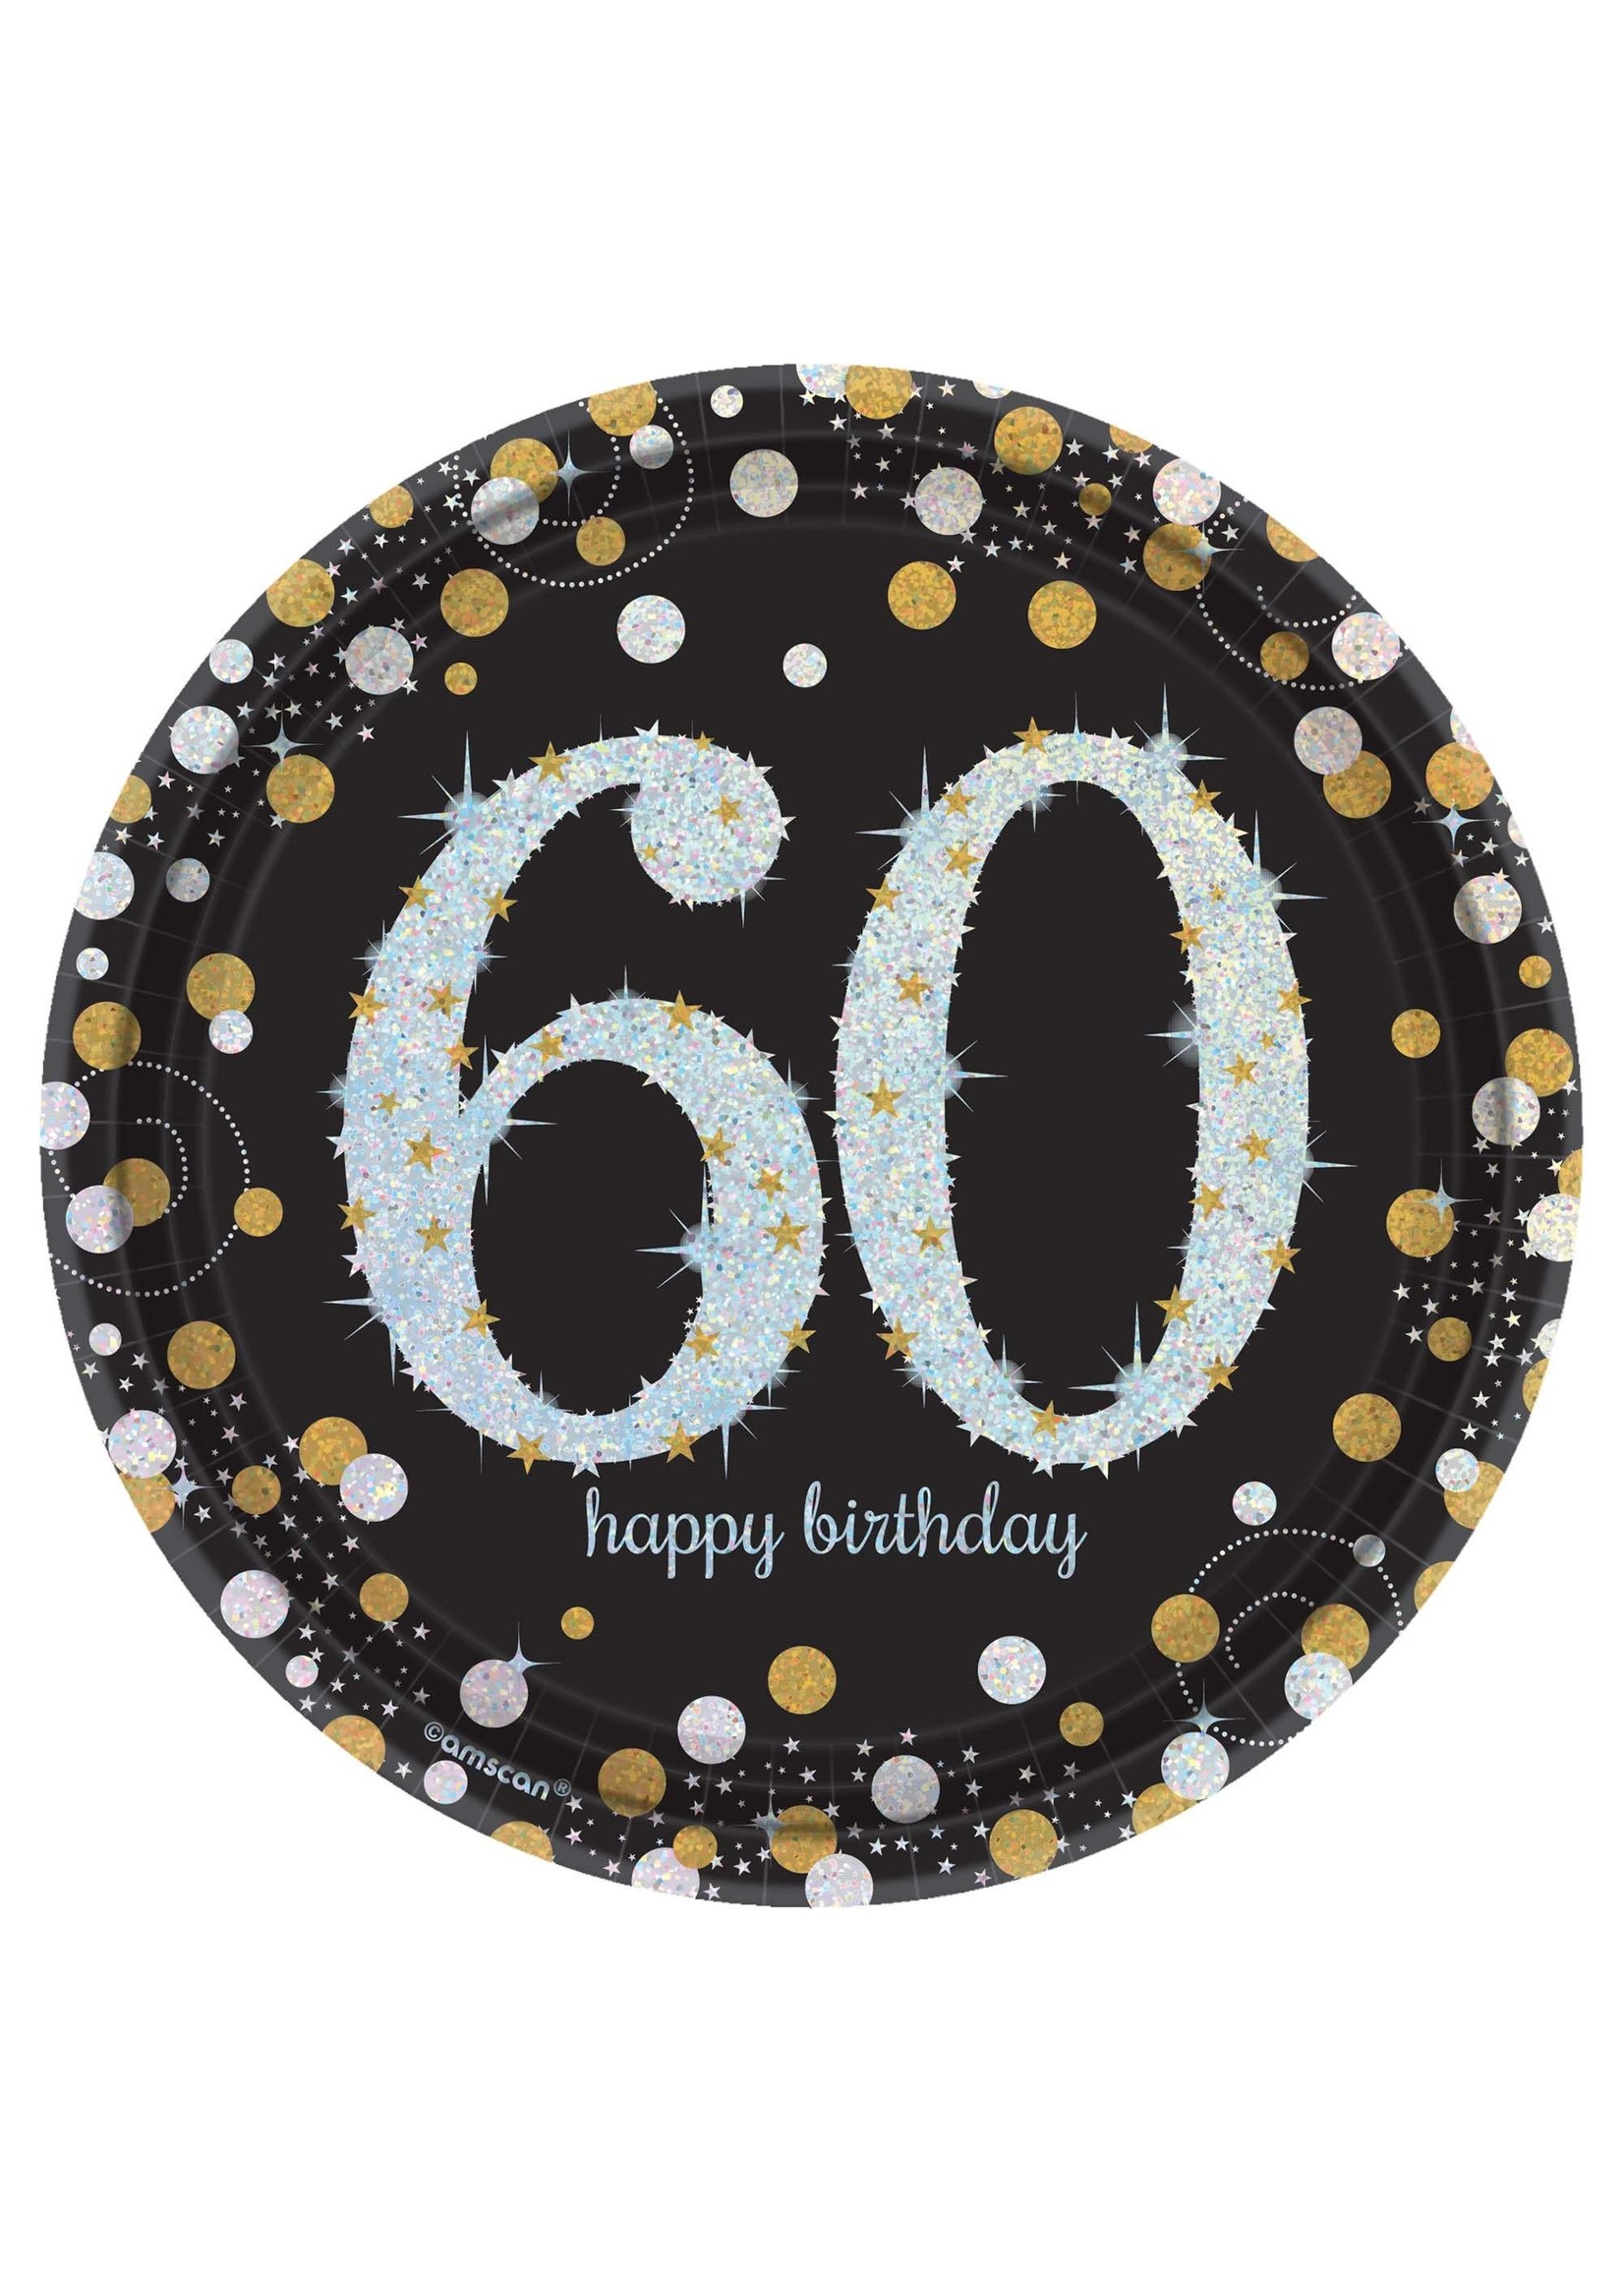 Sparkling Celebration 60th Birthday Dessert Plates - 8ct